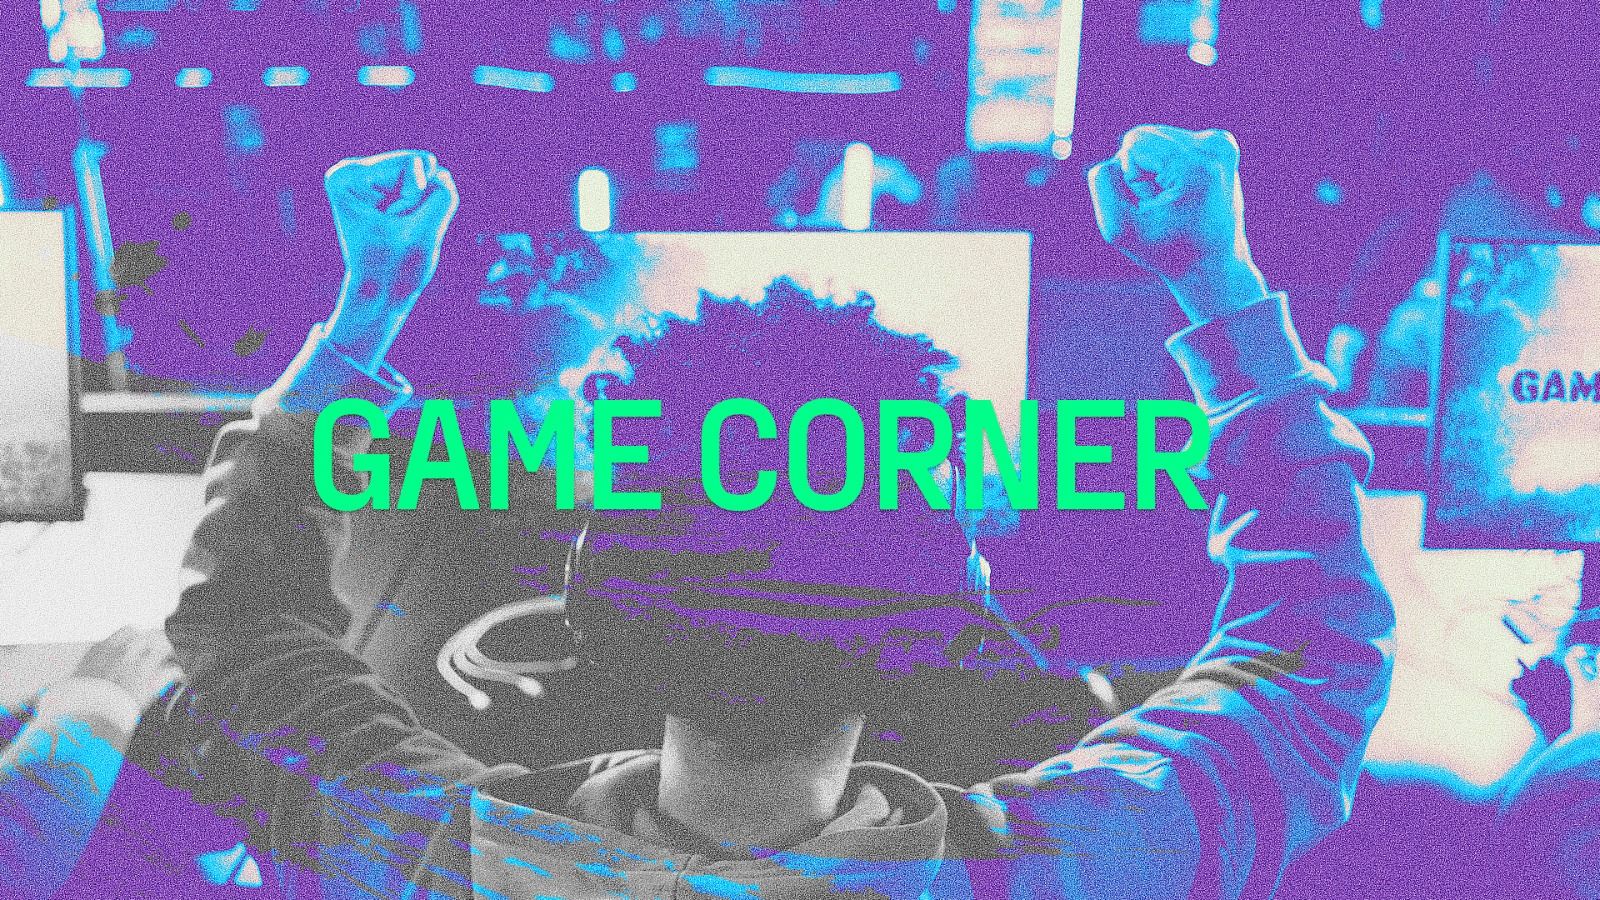 Game Corner (Deni Sulaeman/Skor.id)